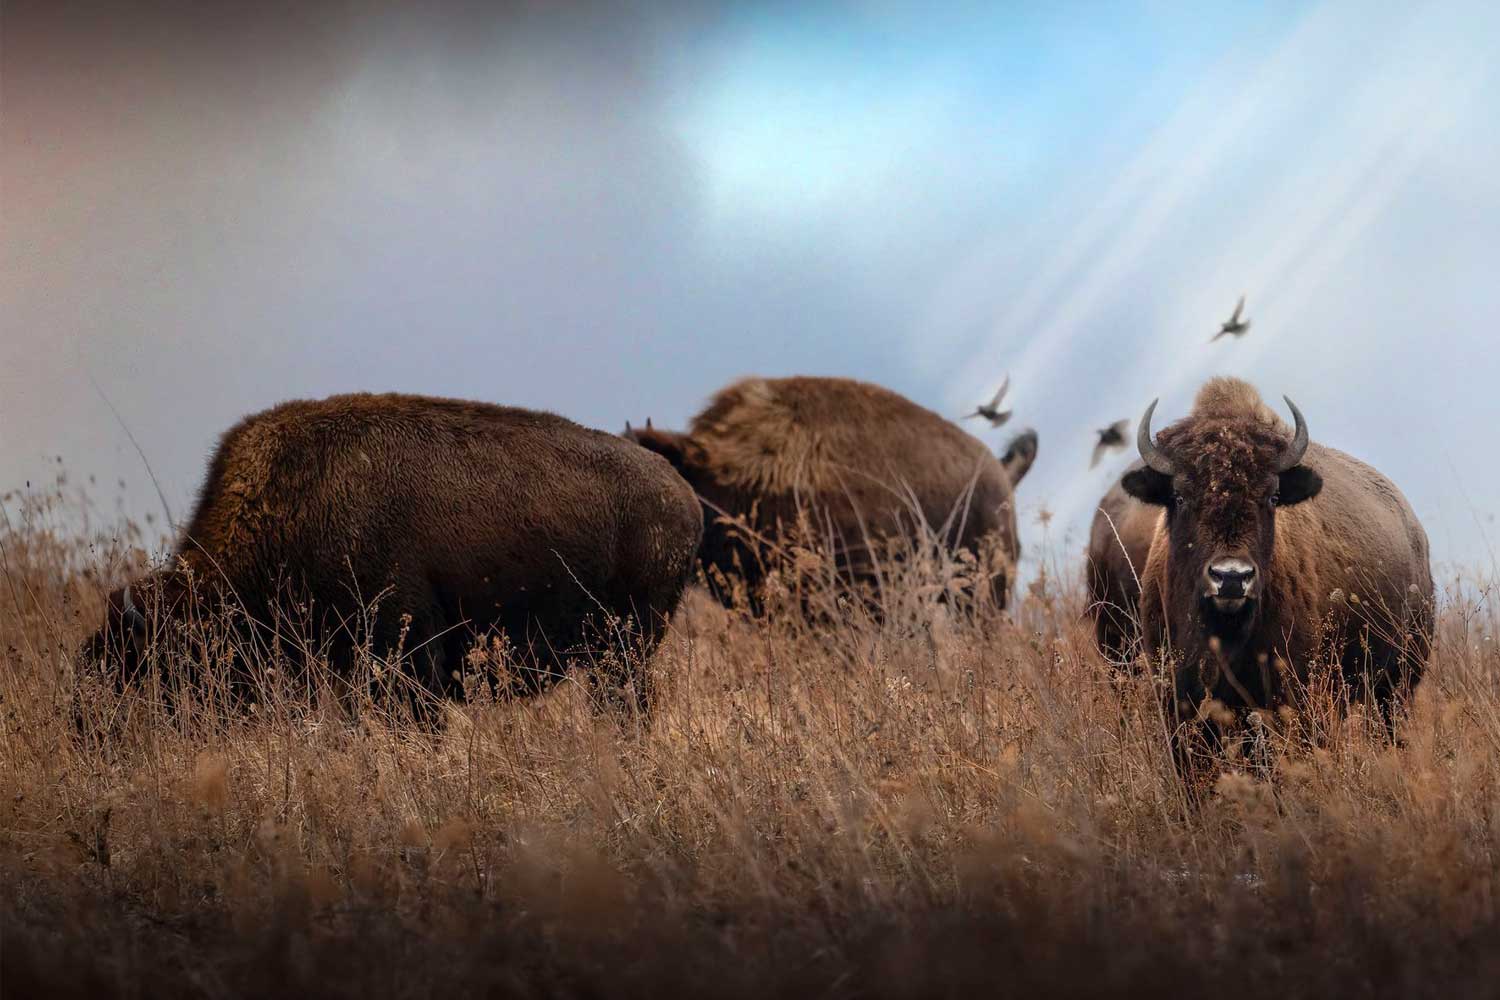 Bison on the prairie